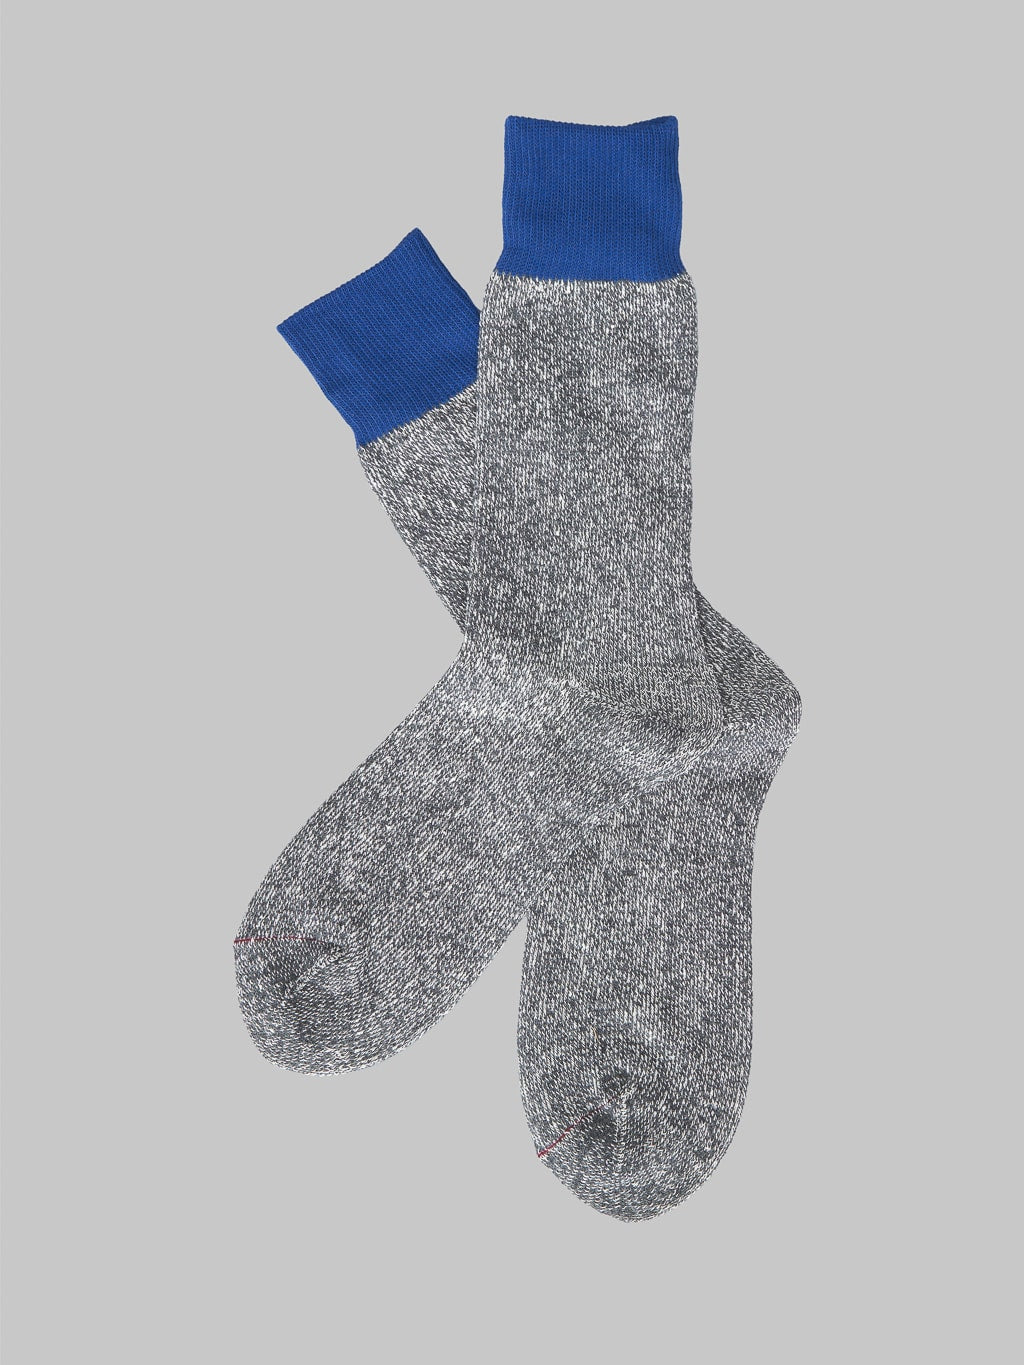 Rototo Double Face Socks Silk Blue Grey Pair